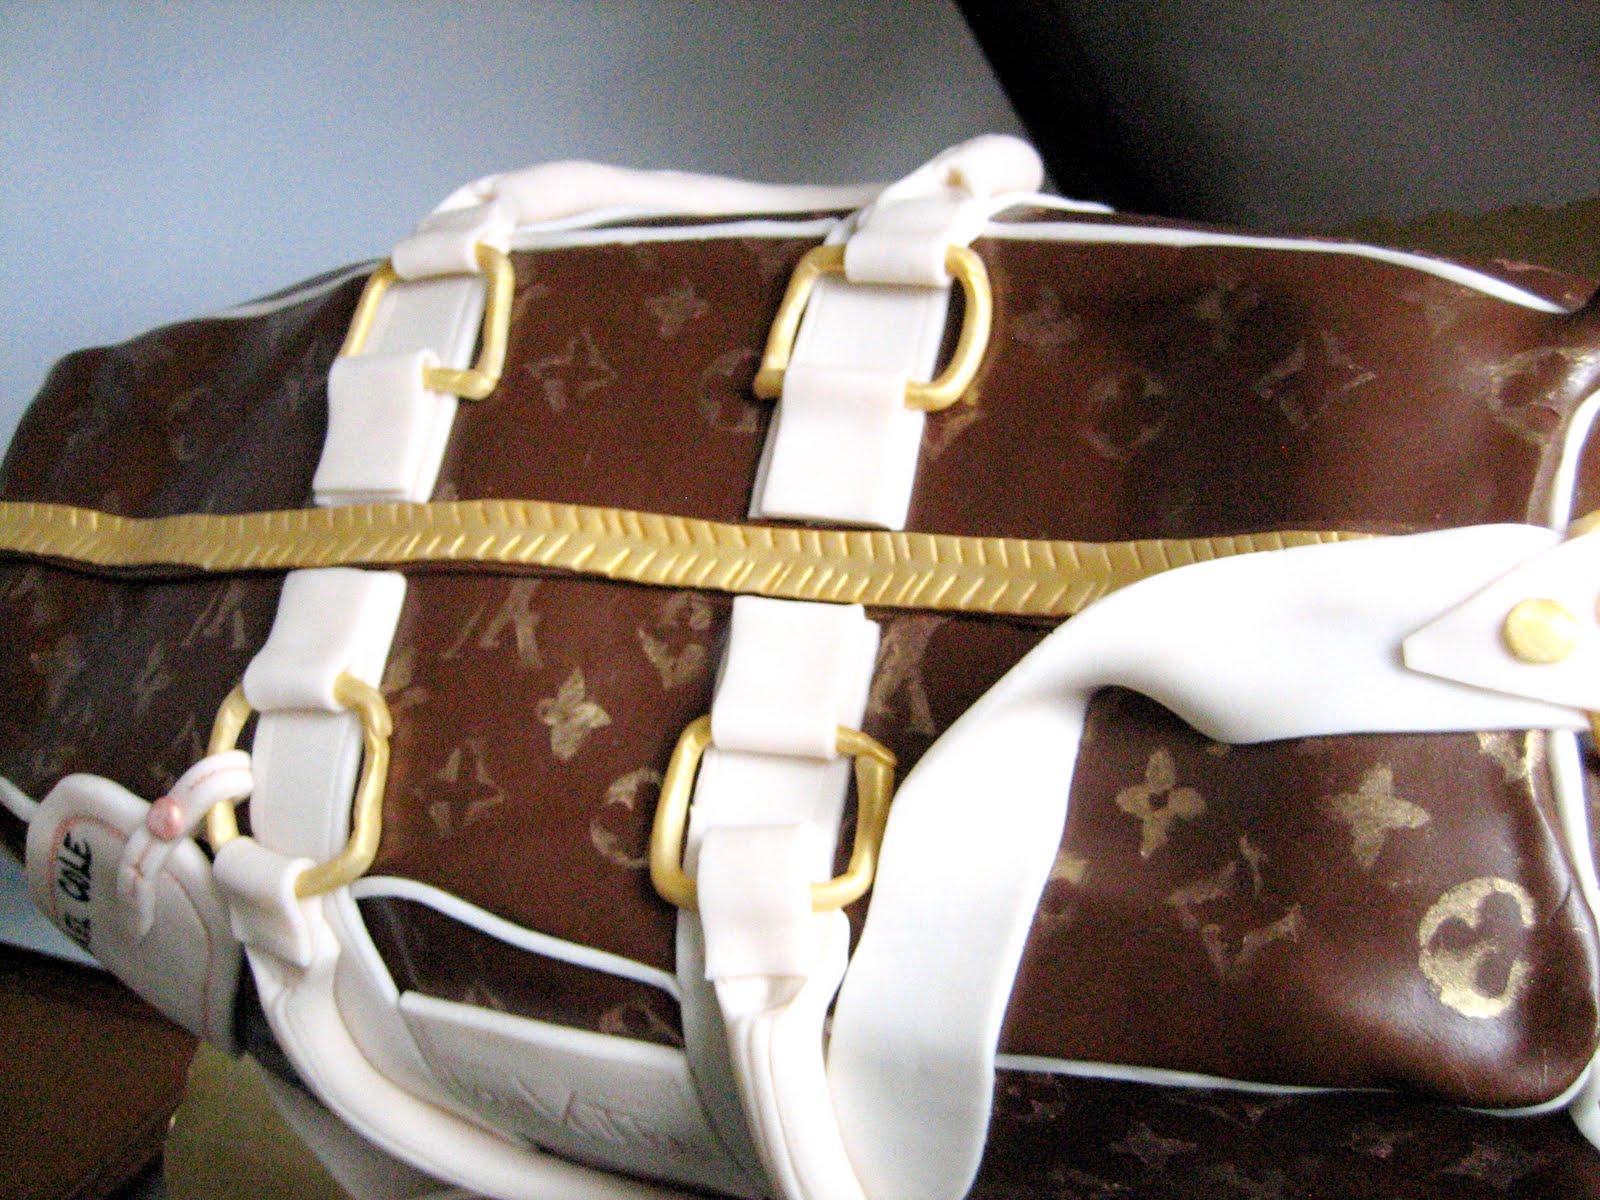 Kakes by Klassic: Louis Vuitton duffle bag cake